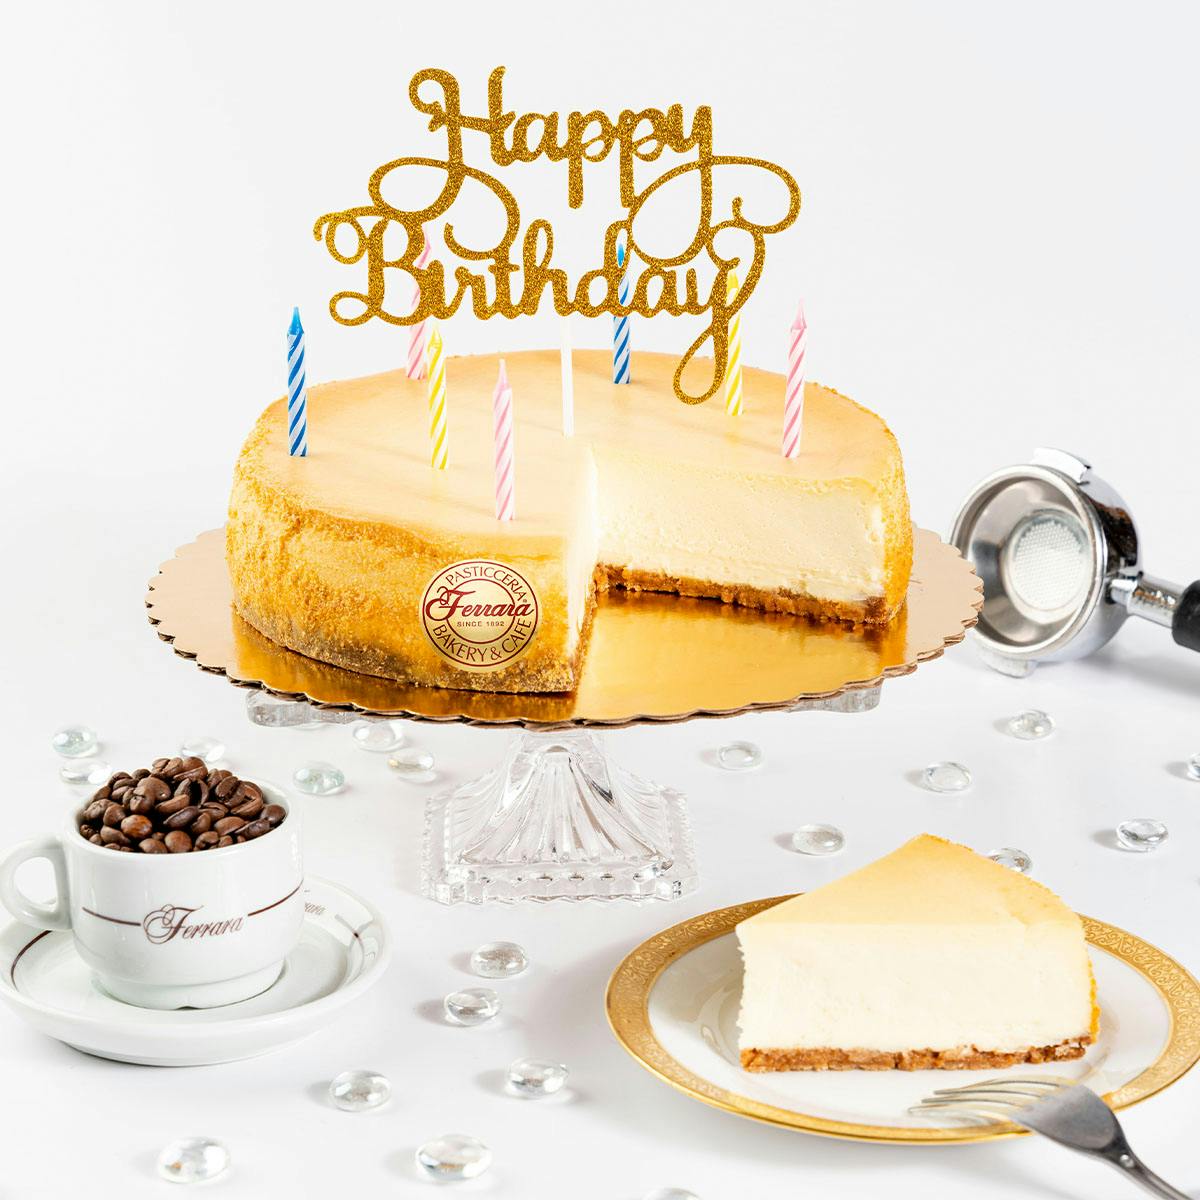 New York Cheesecake Birthday Pack by Ferrara Bakery - Goldbelly